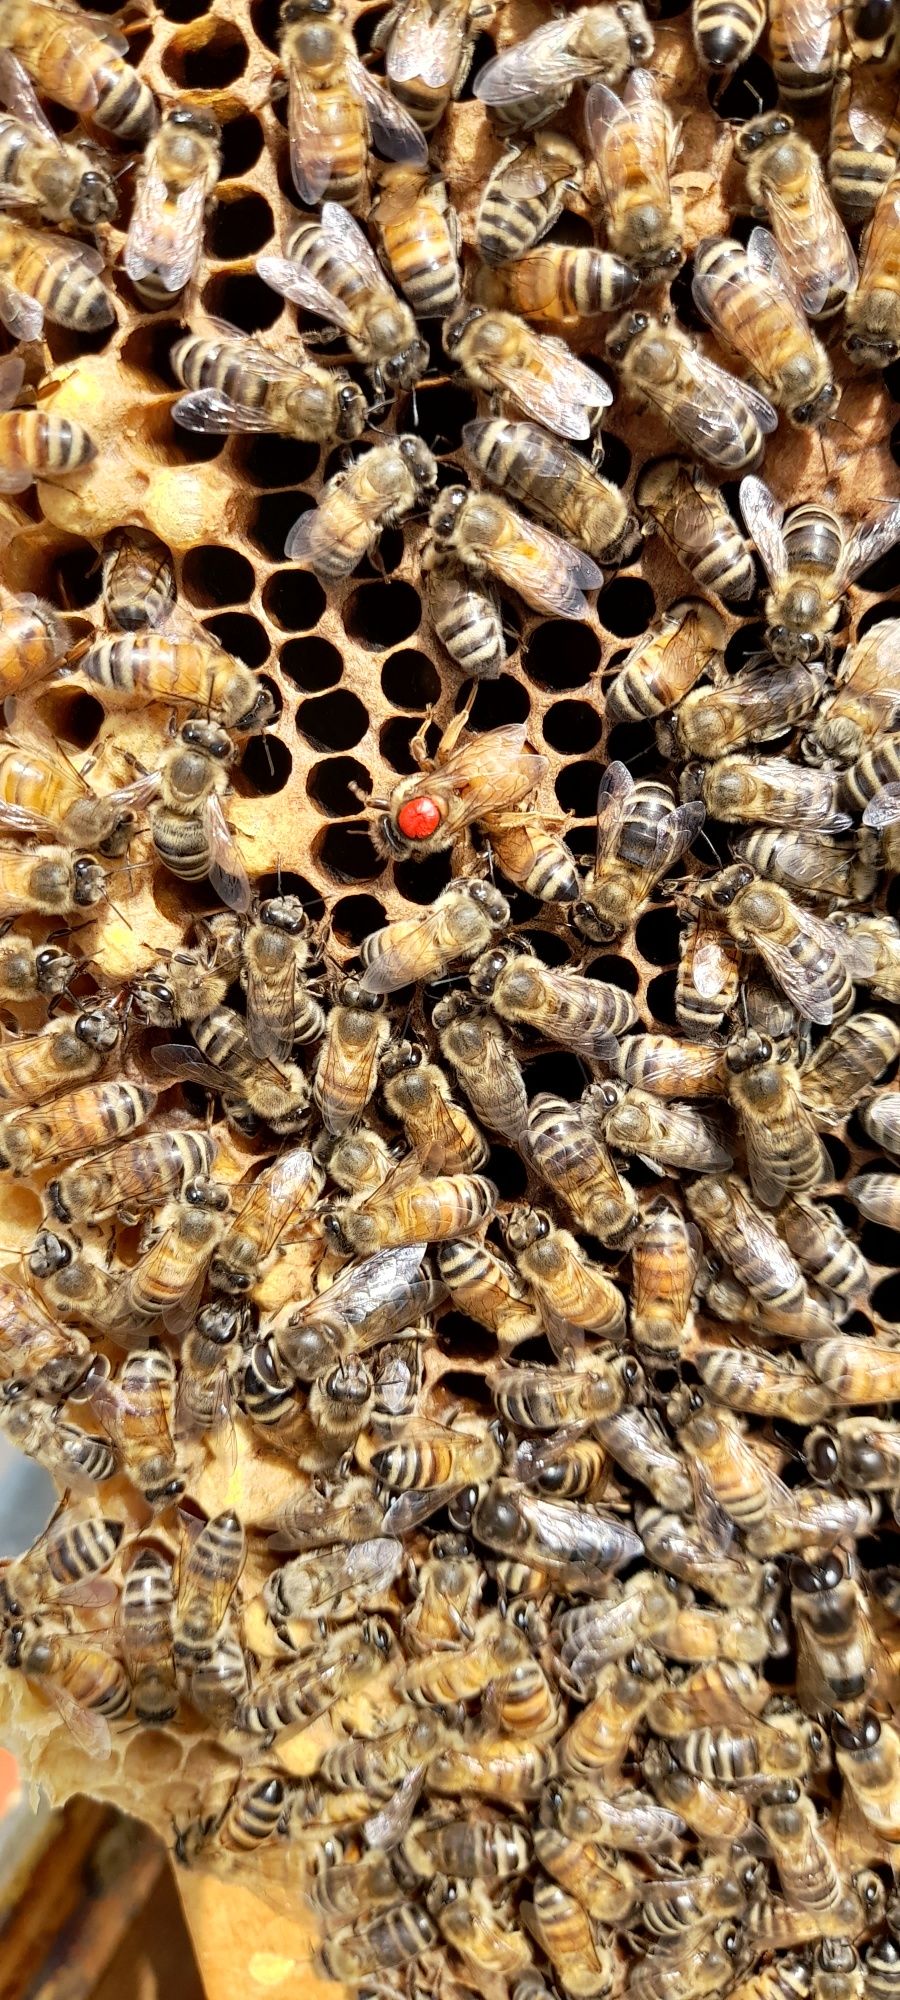 Familii albine foarte productive